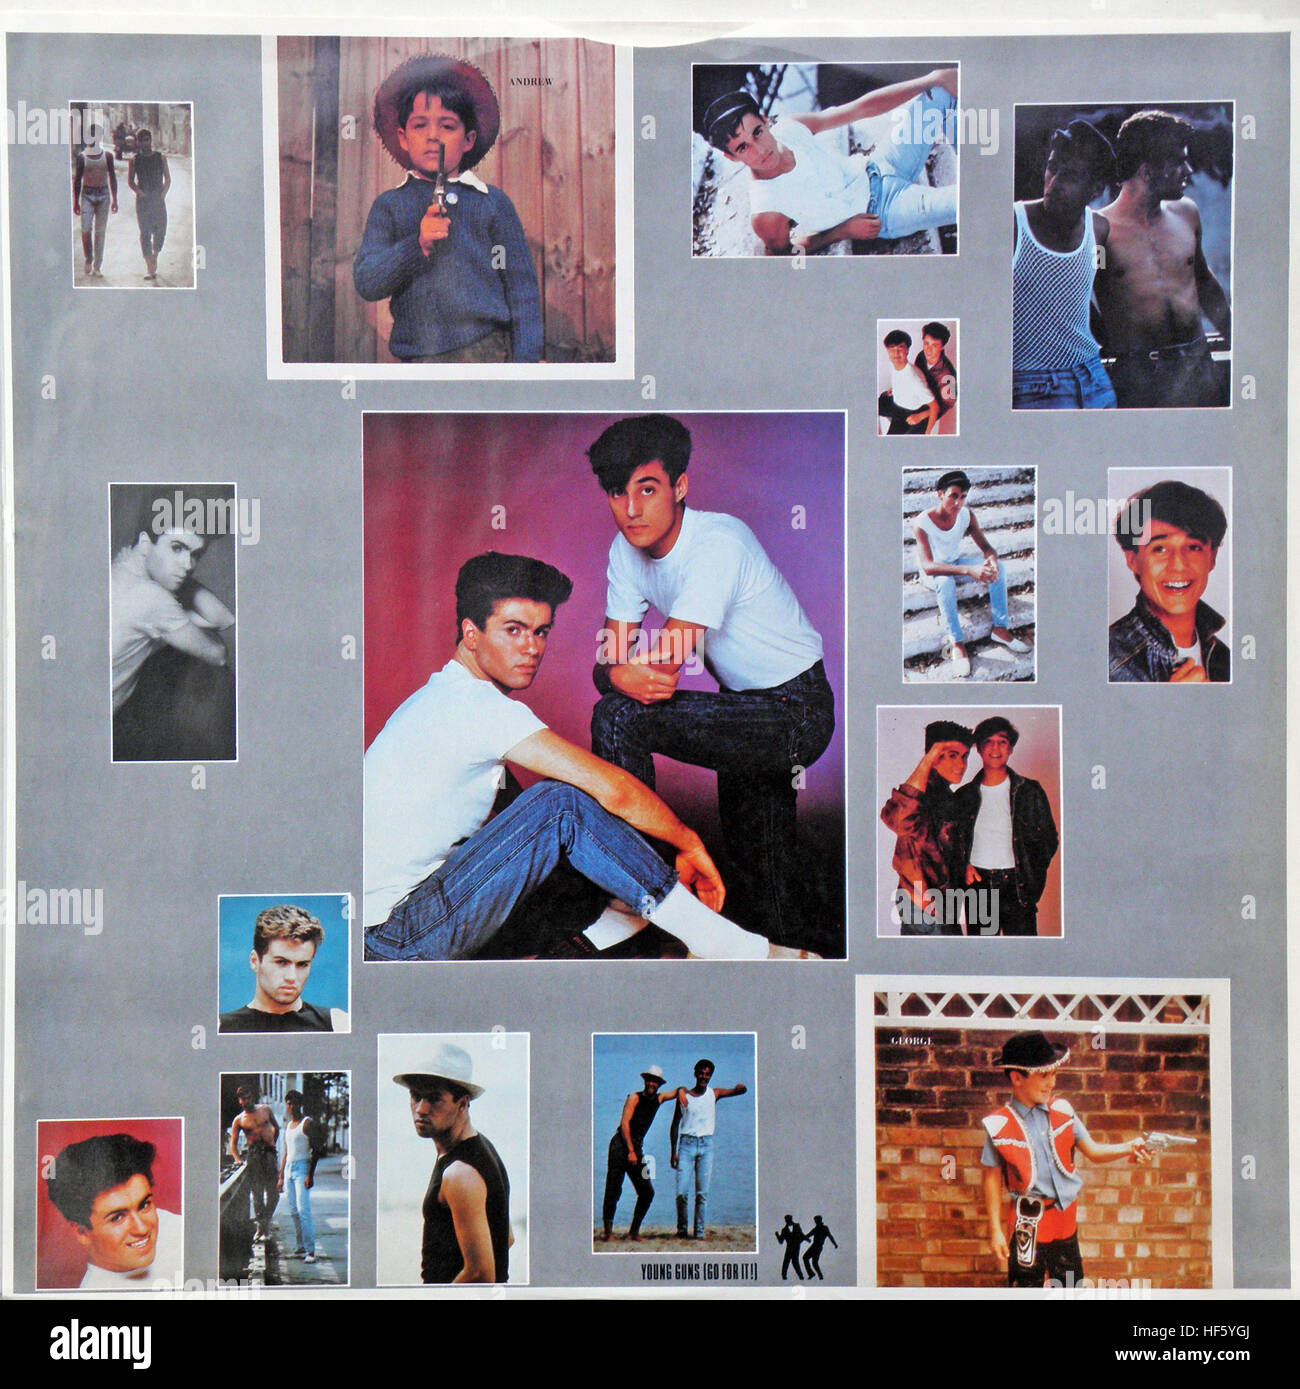 Wham! LP "Fantastisch", Gramophone Record Innenhülse A, George Michael & Andrew Ridgeley, 1983. Stockfoto